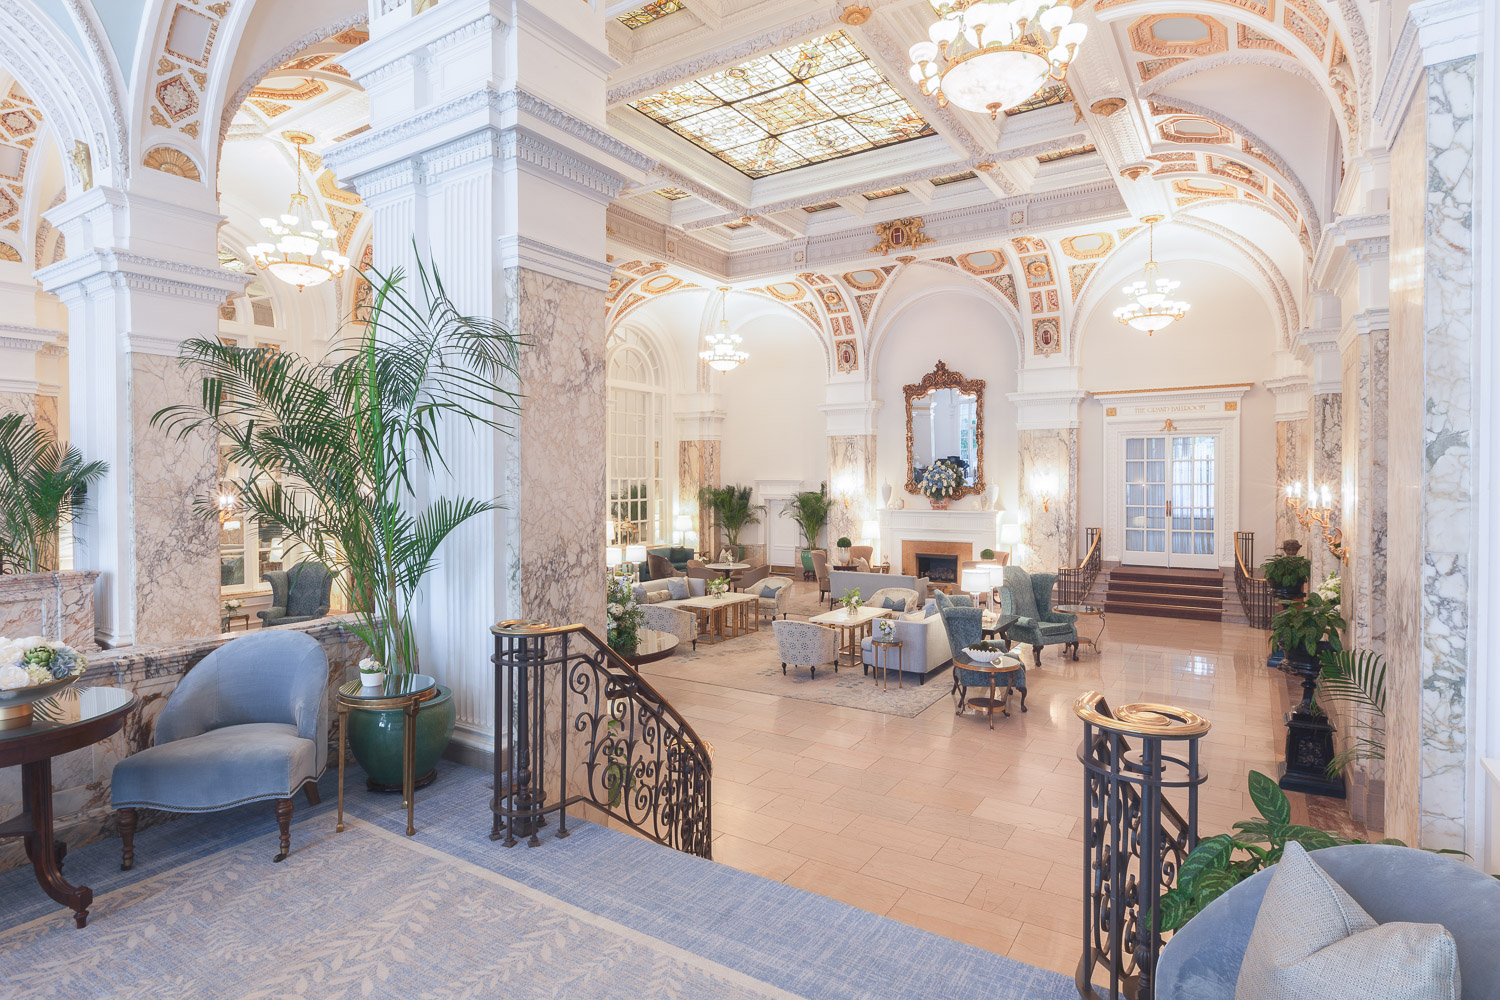 Nashvilles Hermitage Hotel redesigned lobby